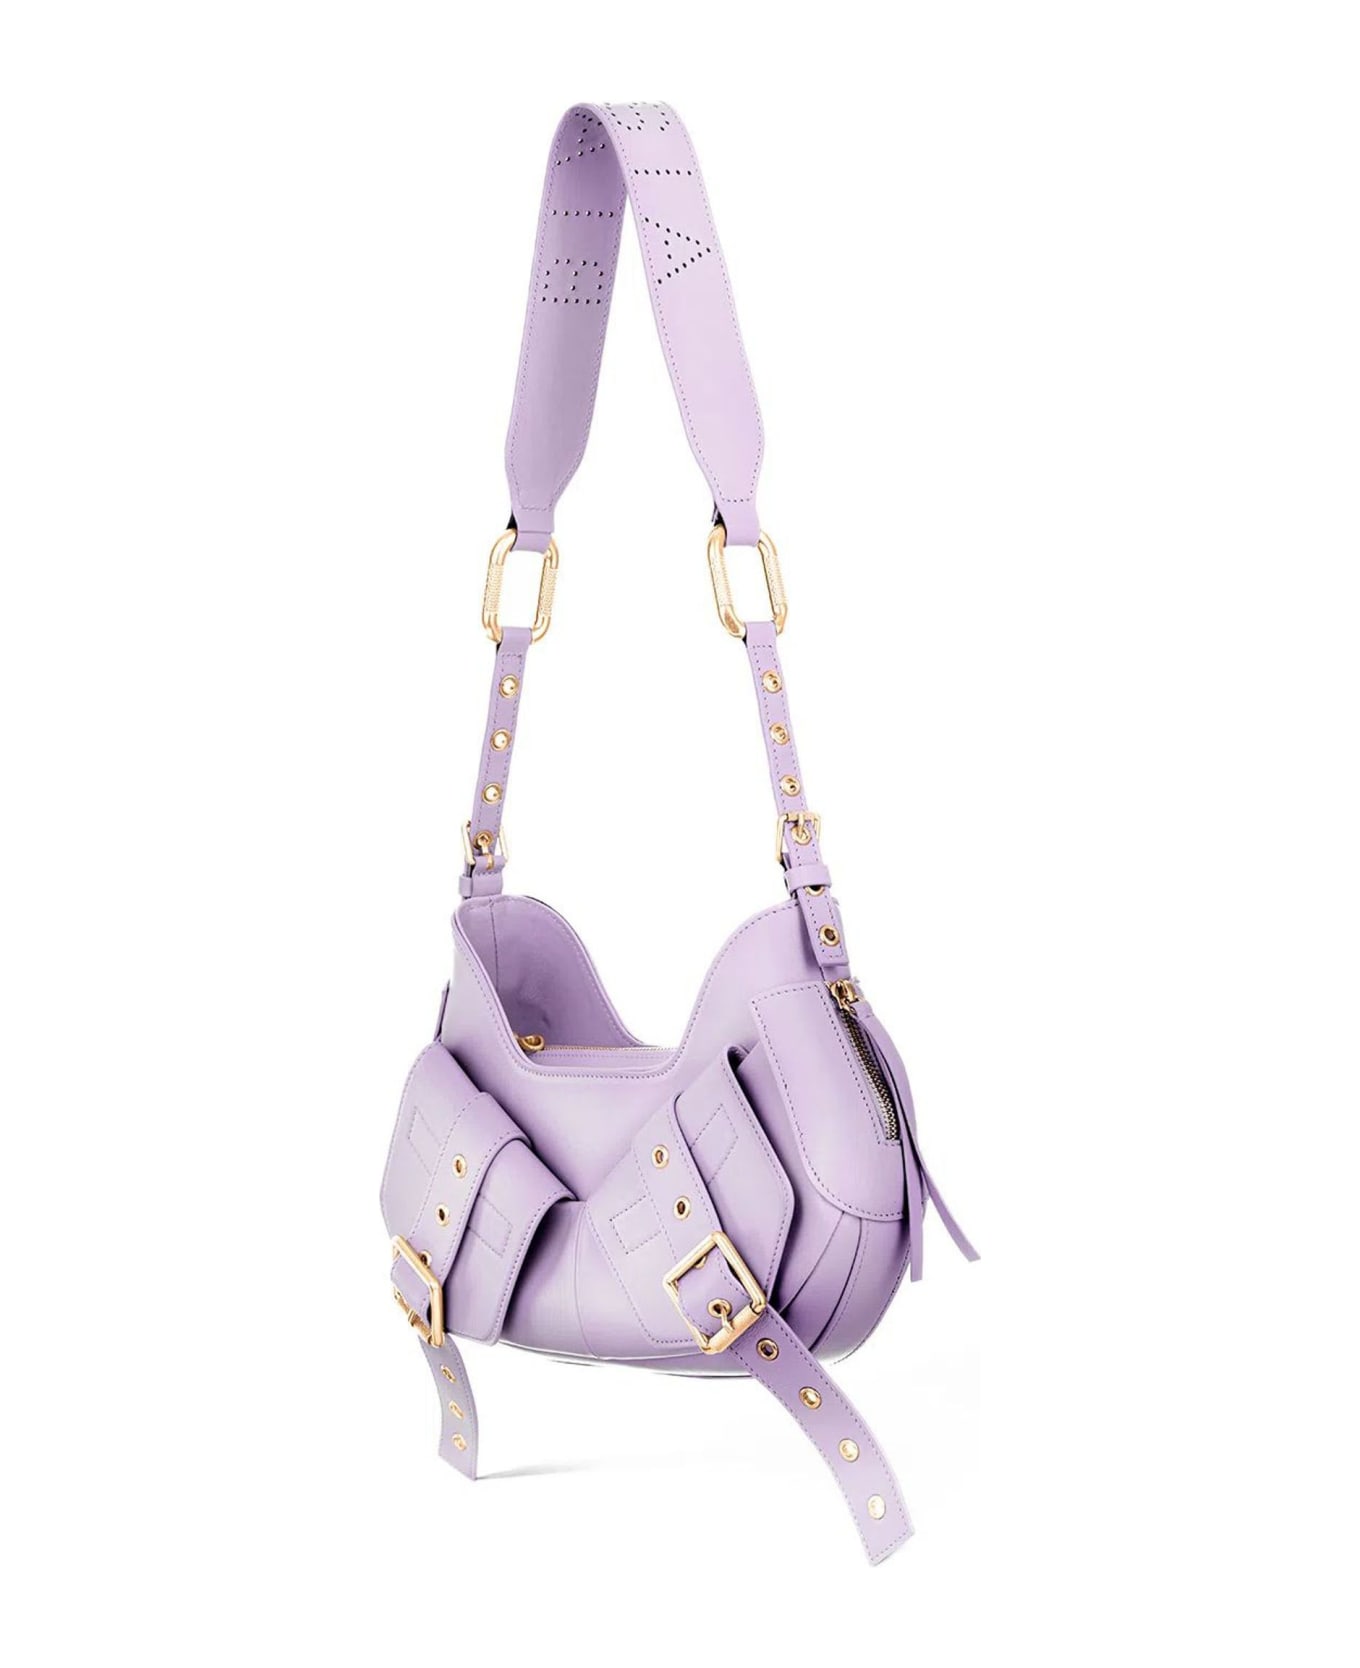 Biasia Lilac Leather Y2k Shoulder Bag - Lilla